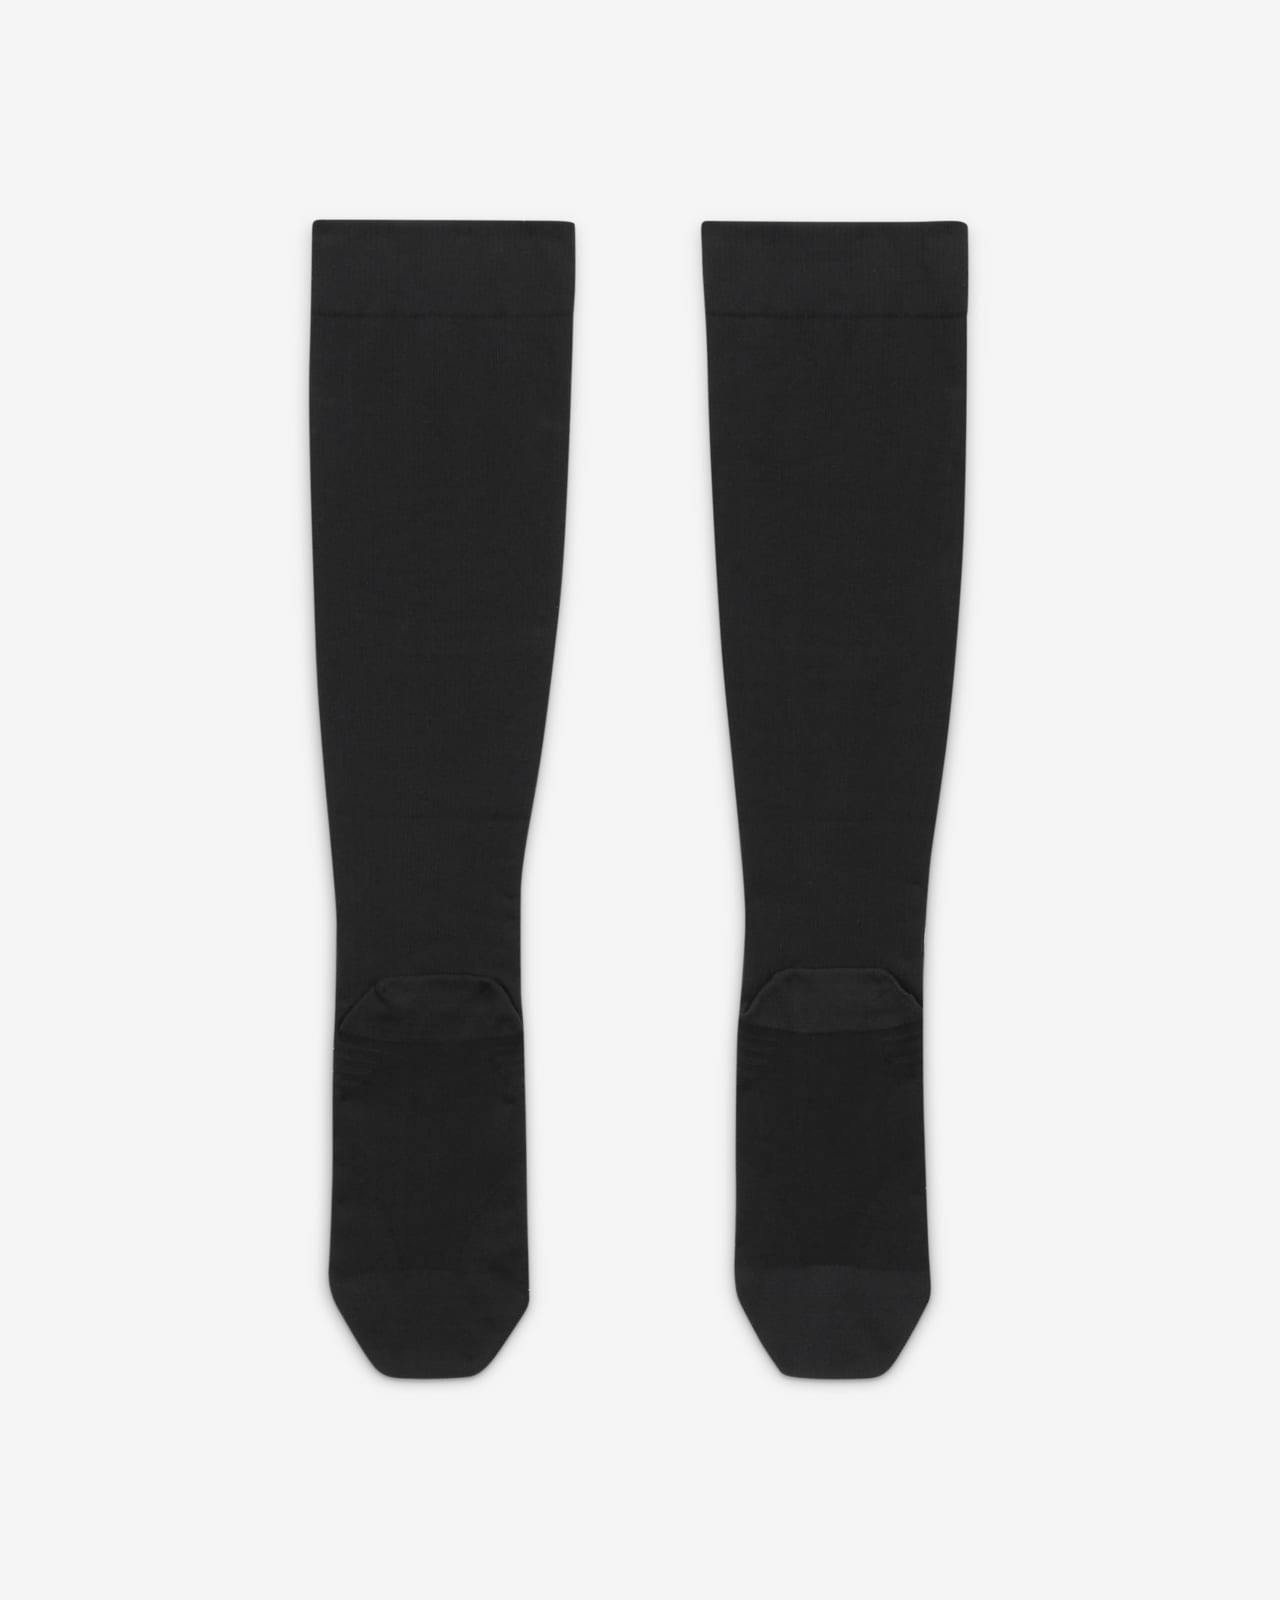 Euro Sox Football Hockey Rugby Activewear Long Length Running Soccer Socks